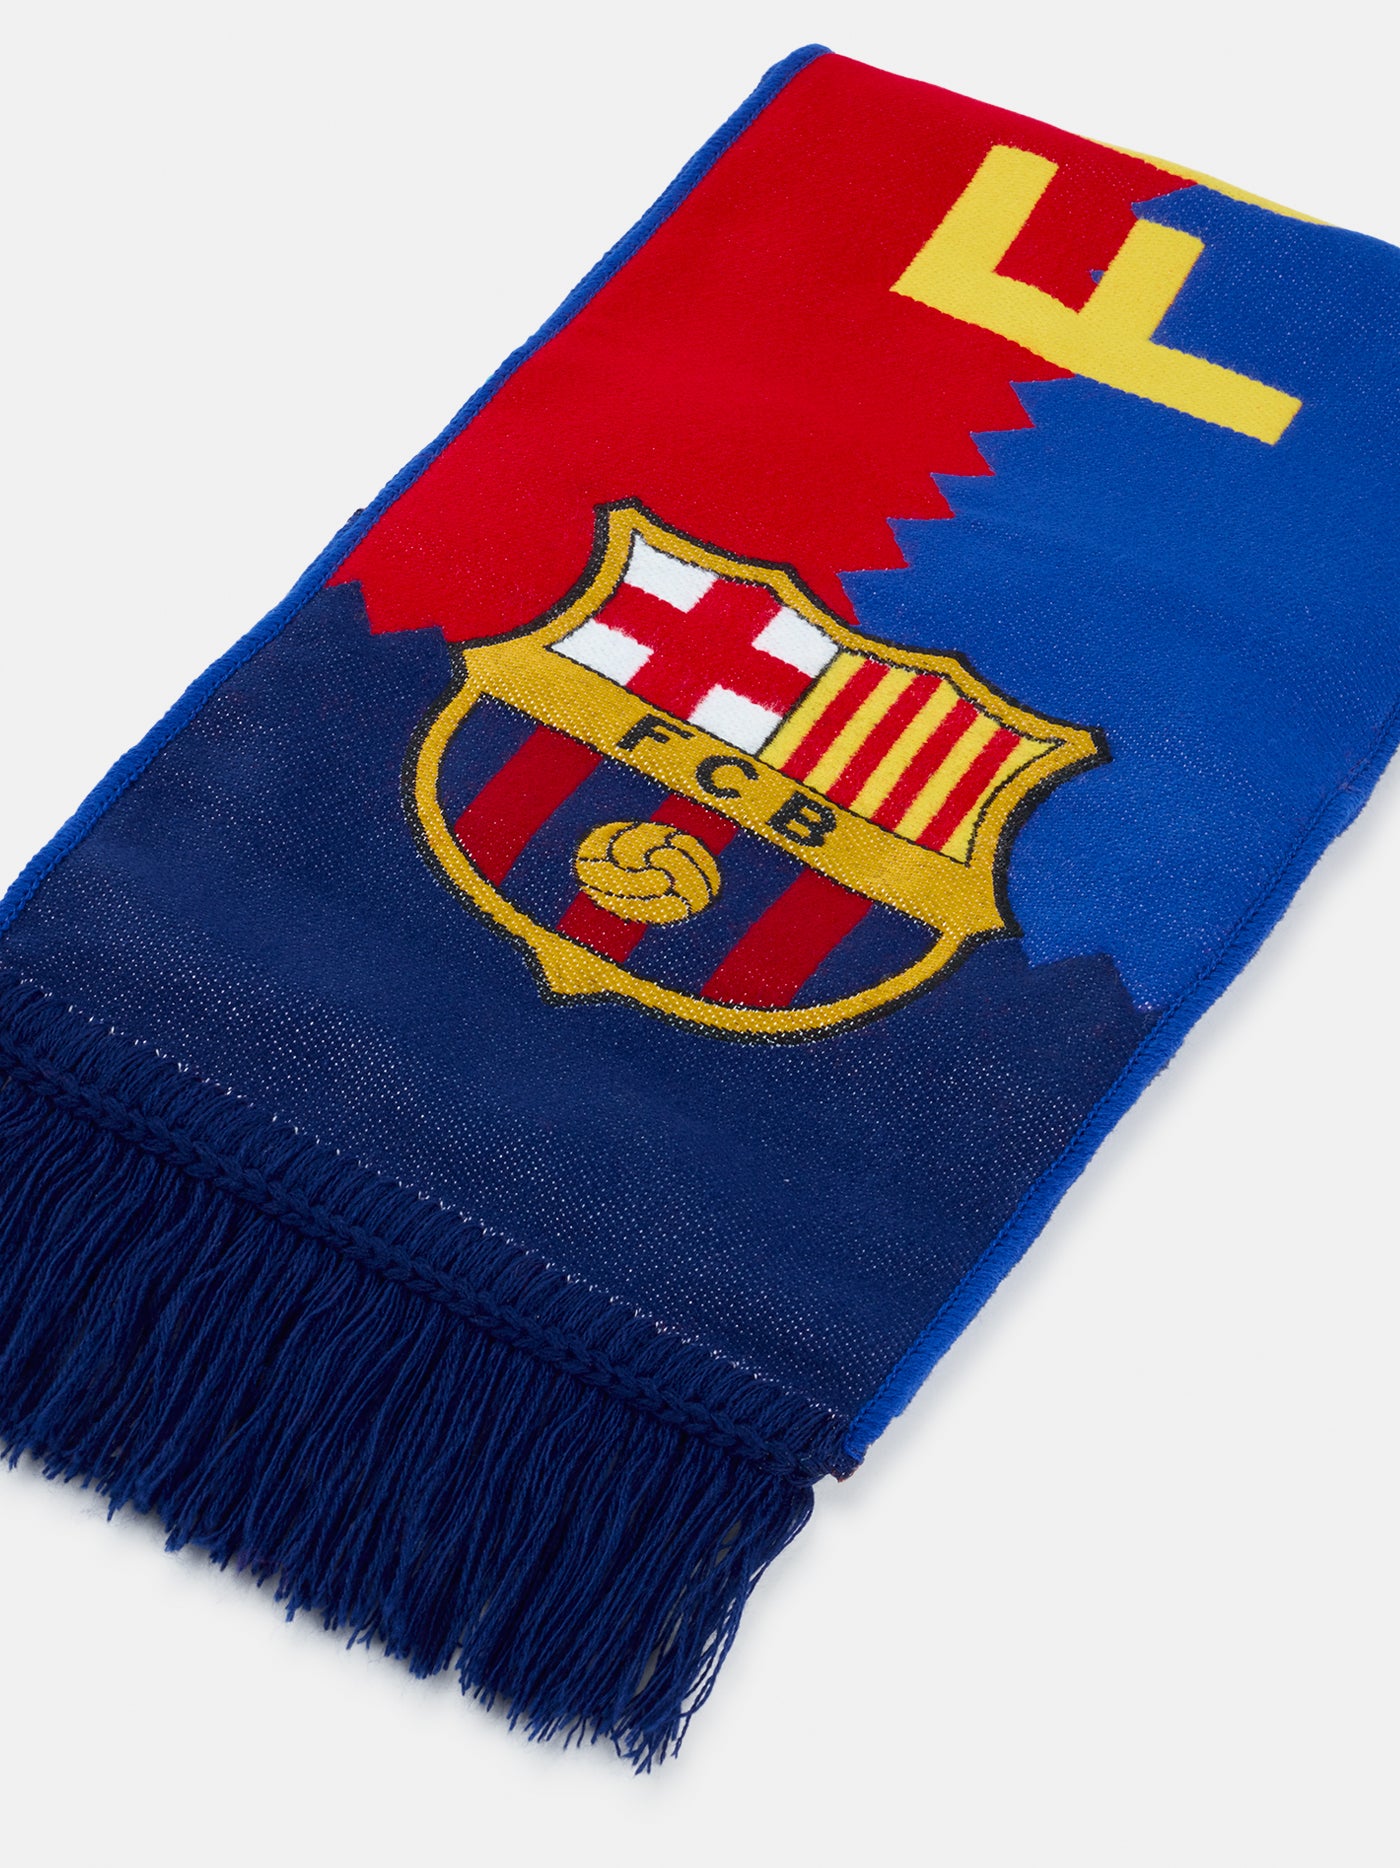 FC Barcelona blaugrana scarf